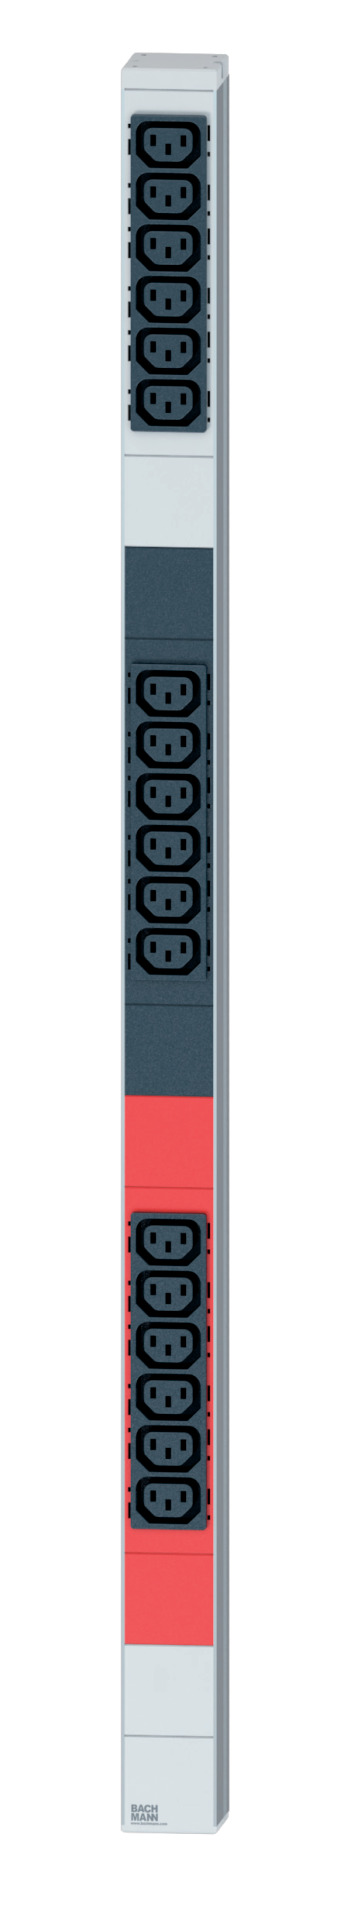 Socket Strip Vertical 18 x C13, 3-Phase, Plug CEE 16 A red